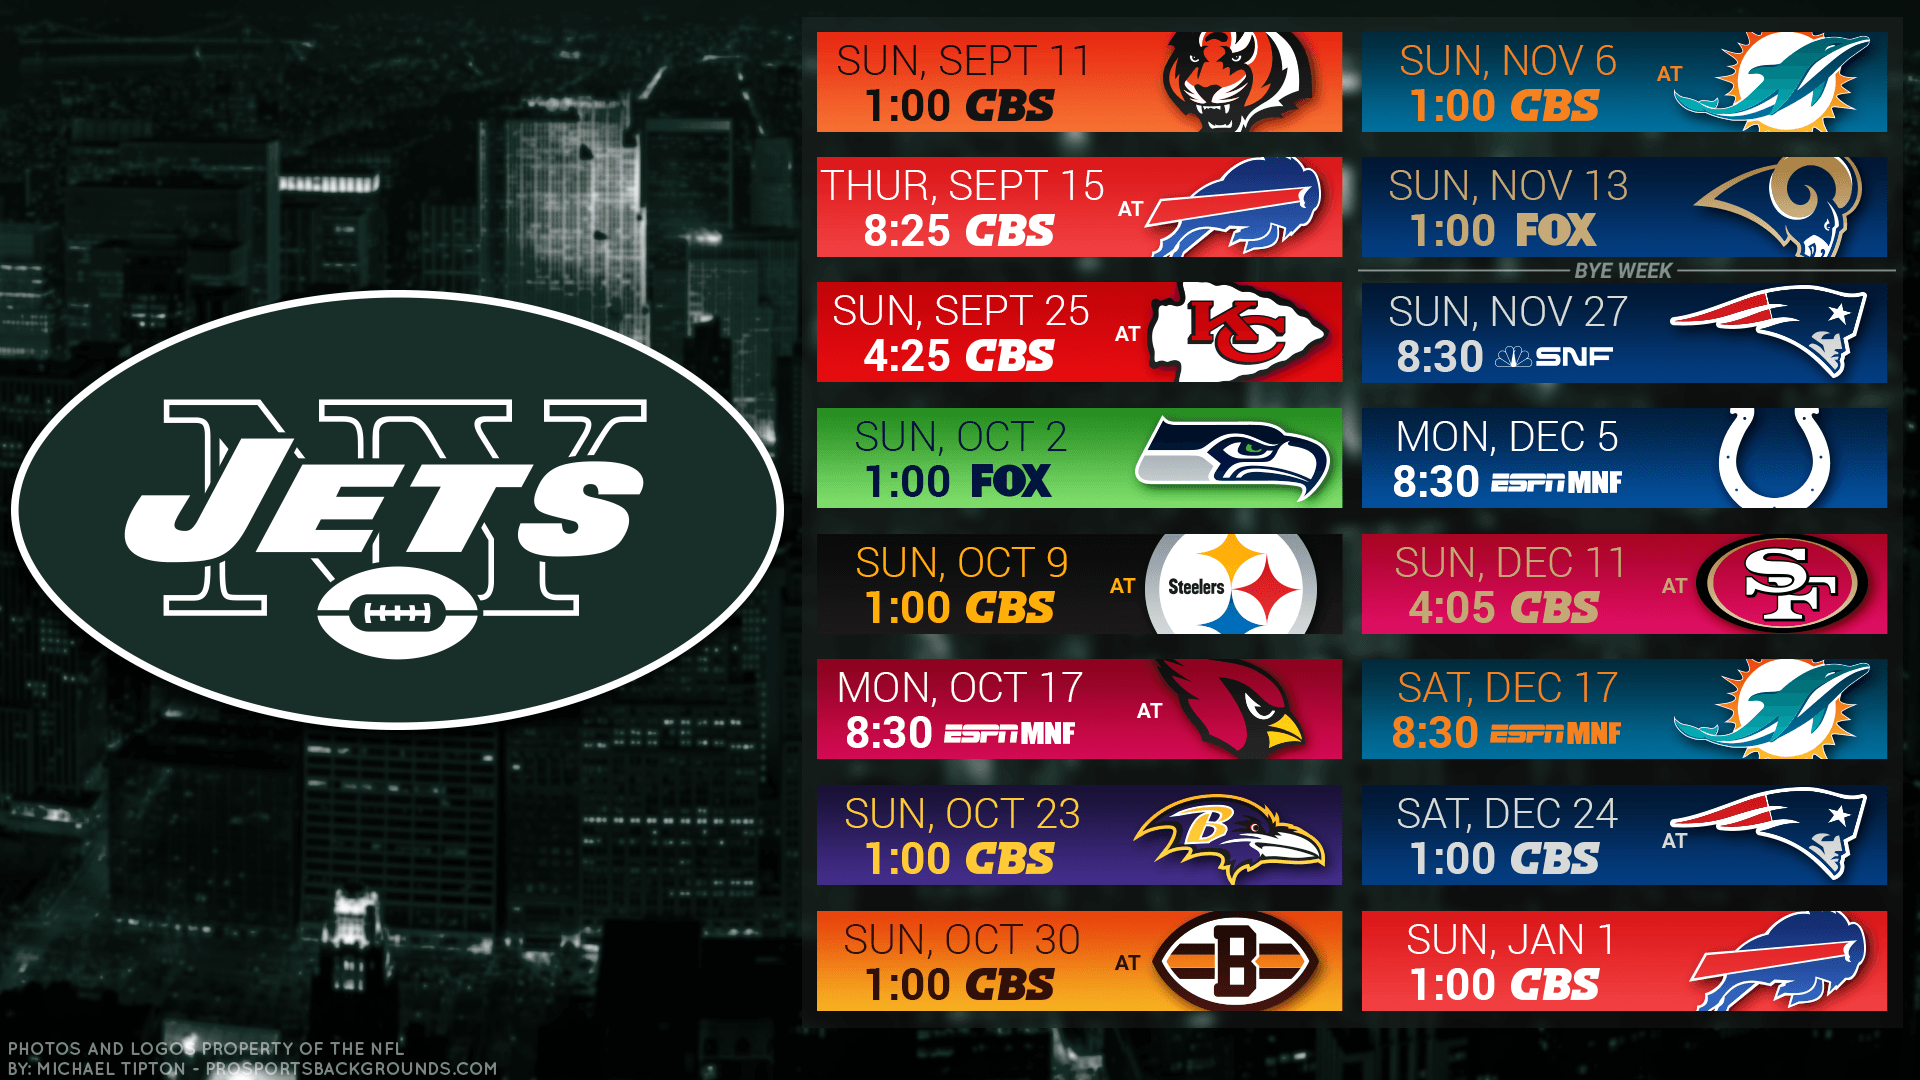 New York Jets 2016 HD Schedule Wallpaper